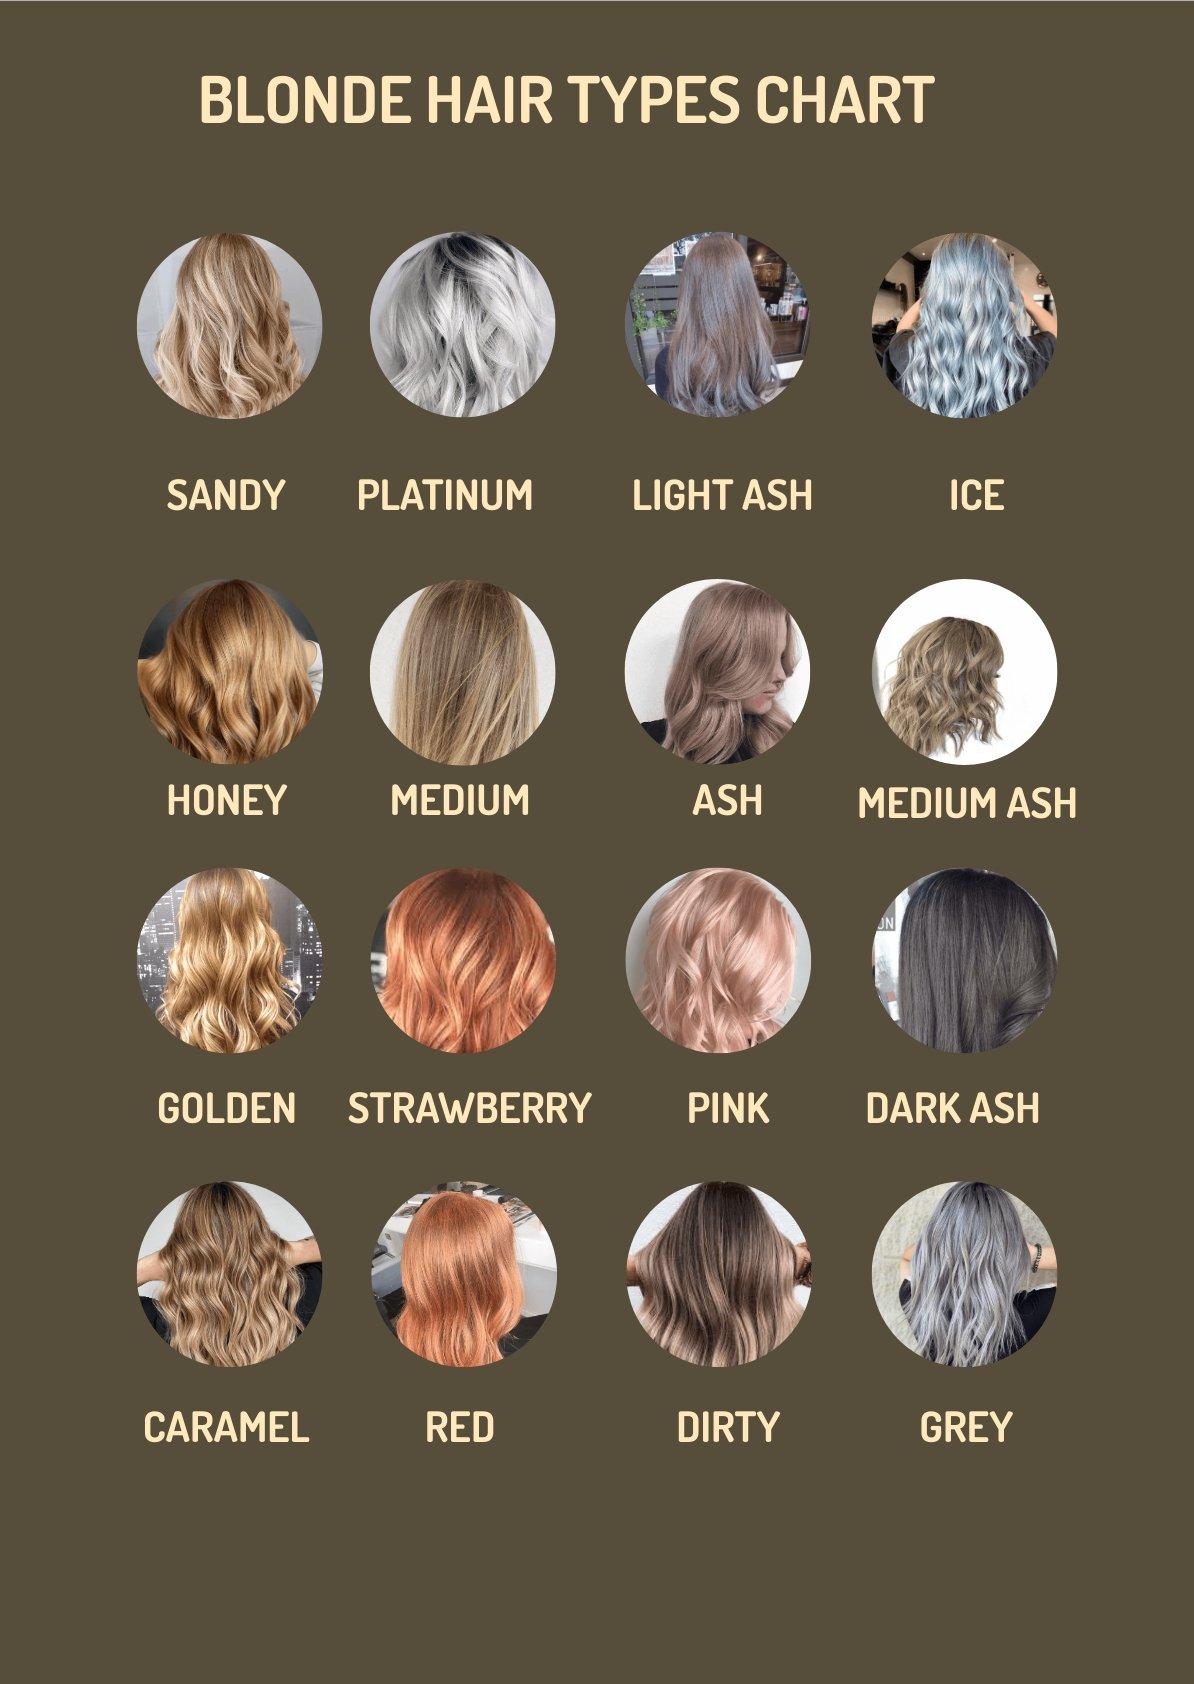 Hair Templates - Design, Free, Download 